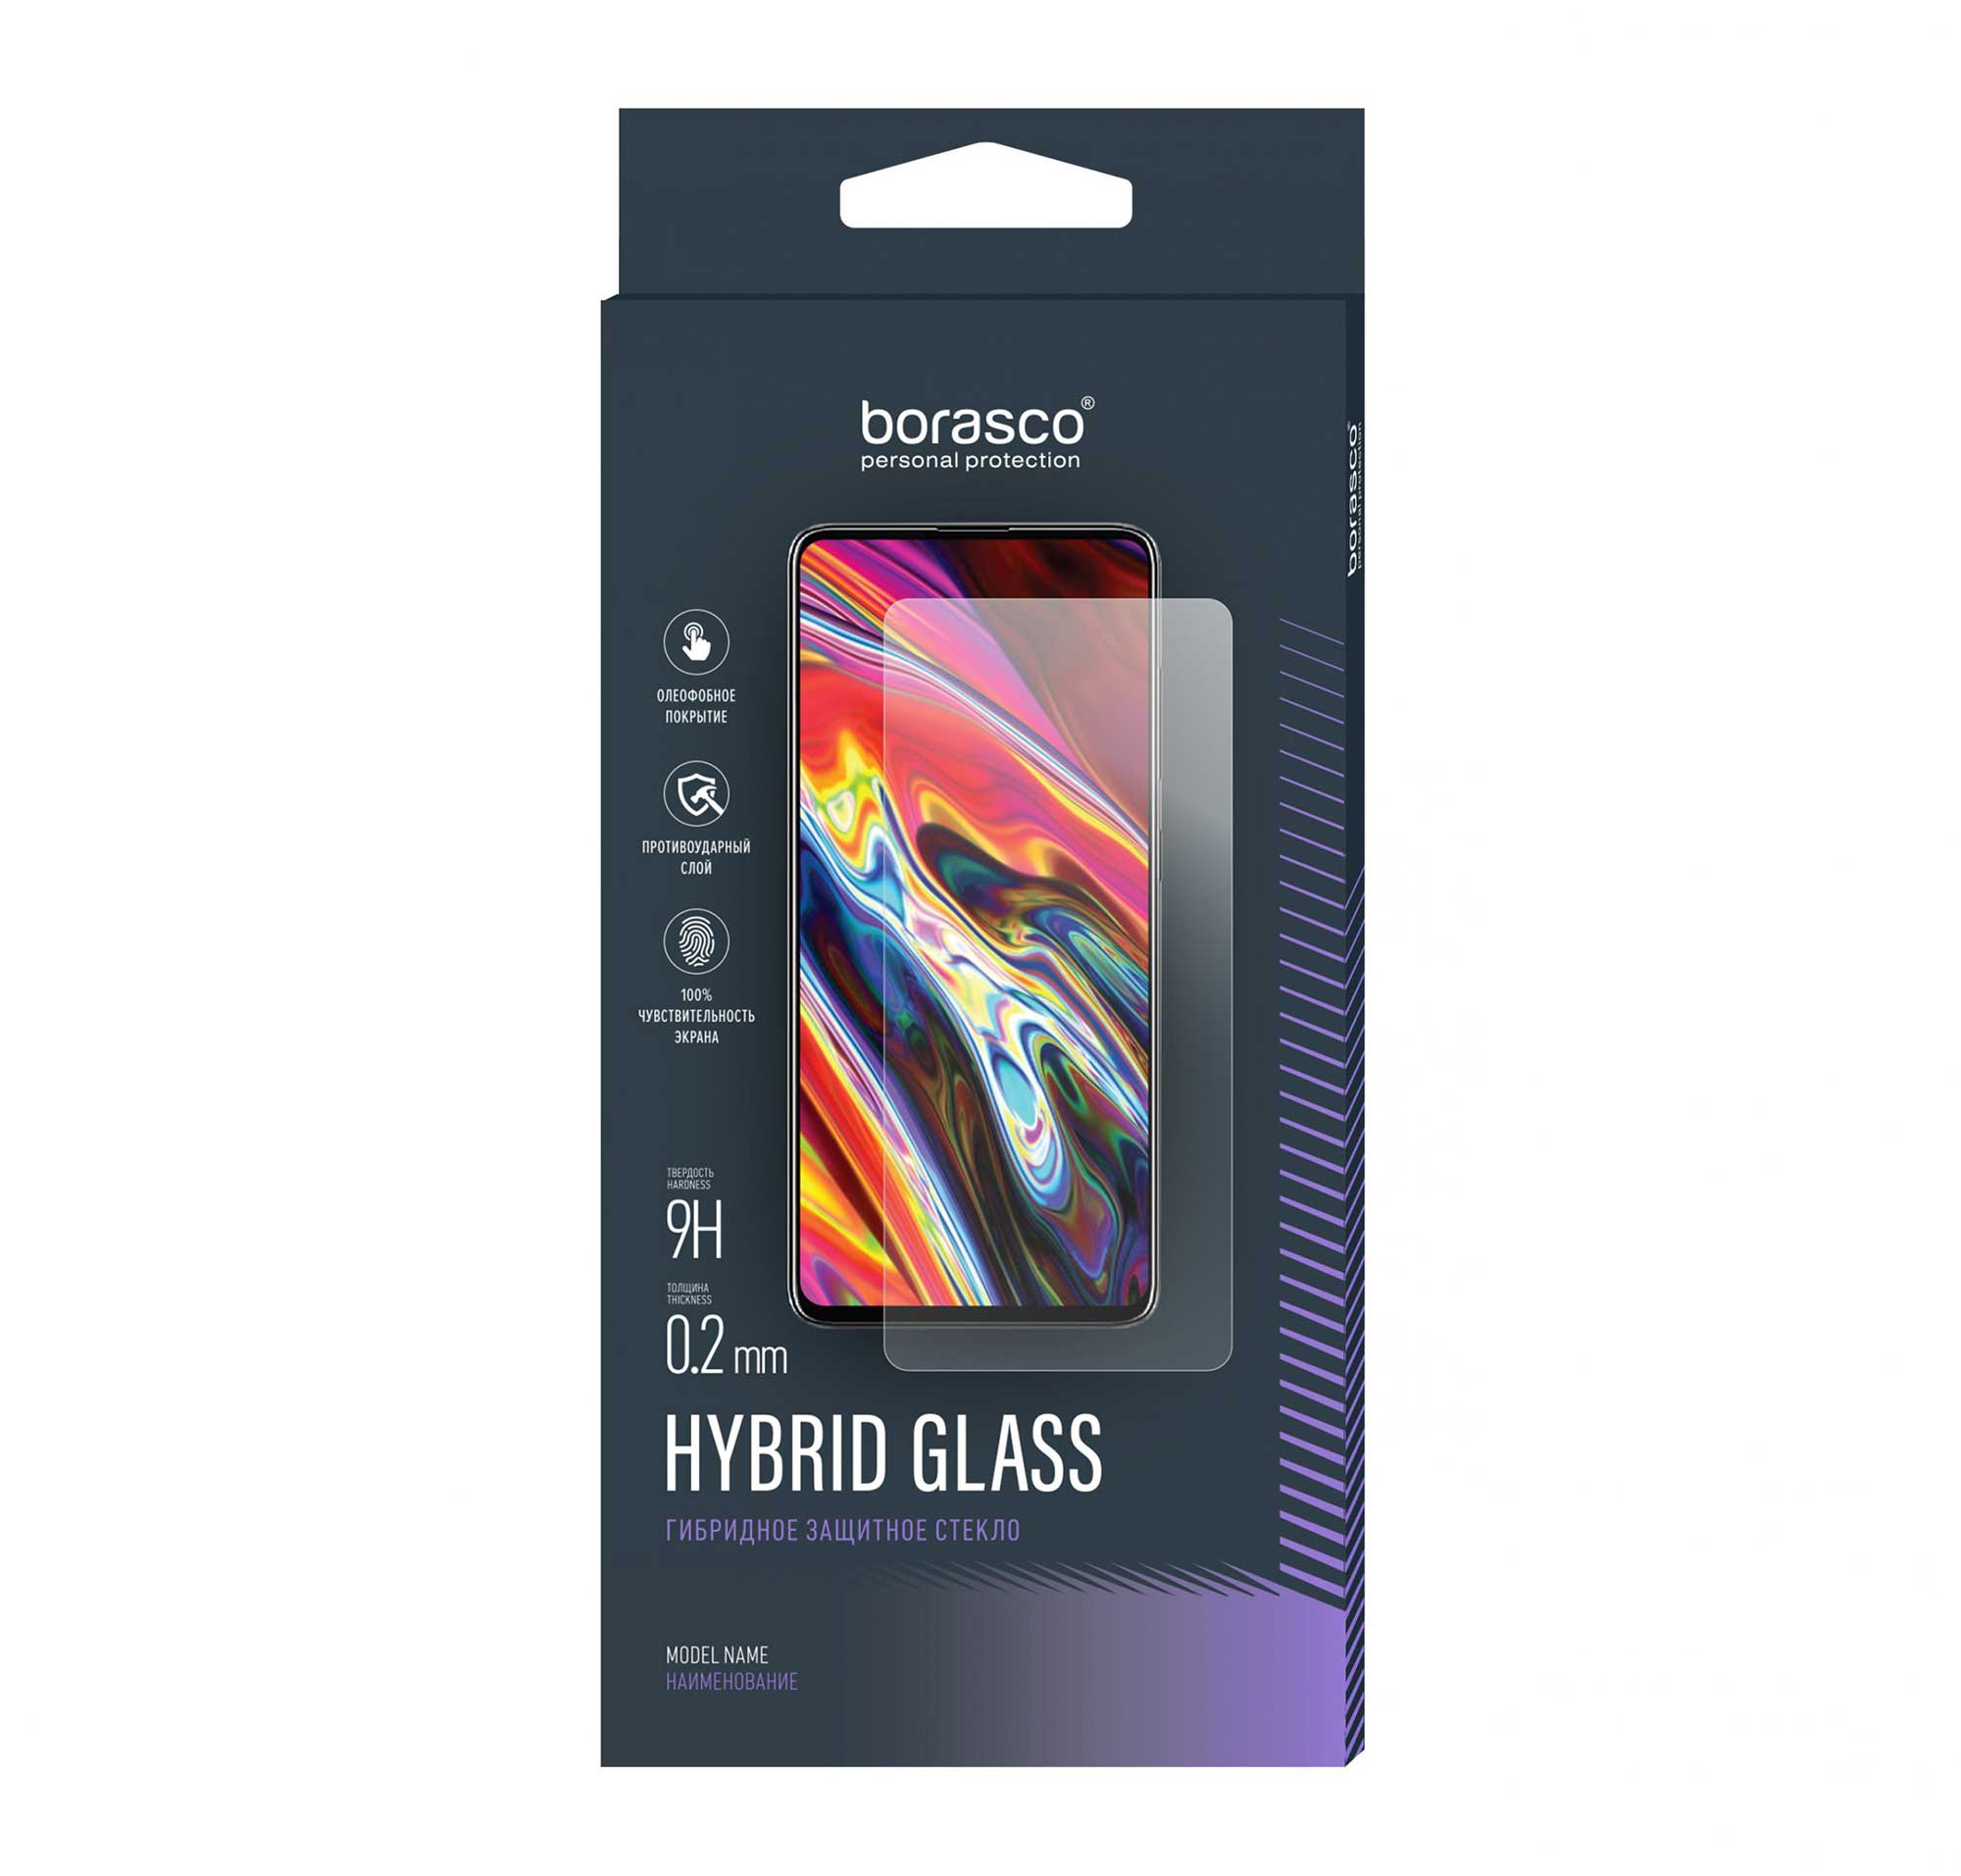 Защитное стекло BoraSCO Hybrid Glass для BQ 4030G NICE MINI матовая защитная гидрогелевая пленка на bq 4030g nice mini бикью 4030g nice mini